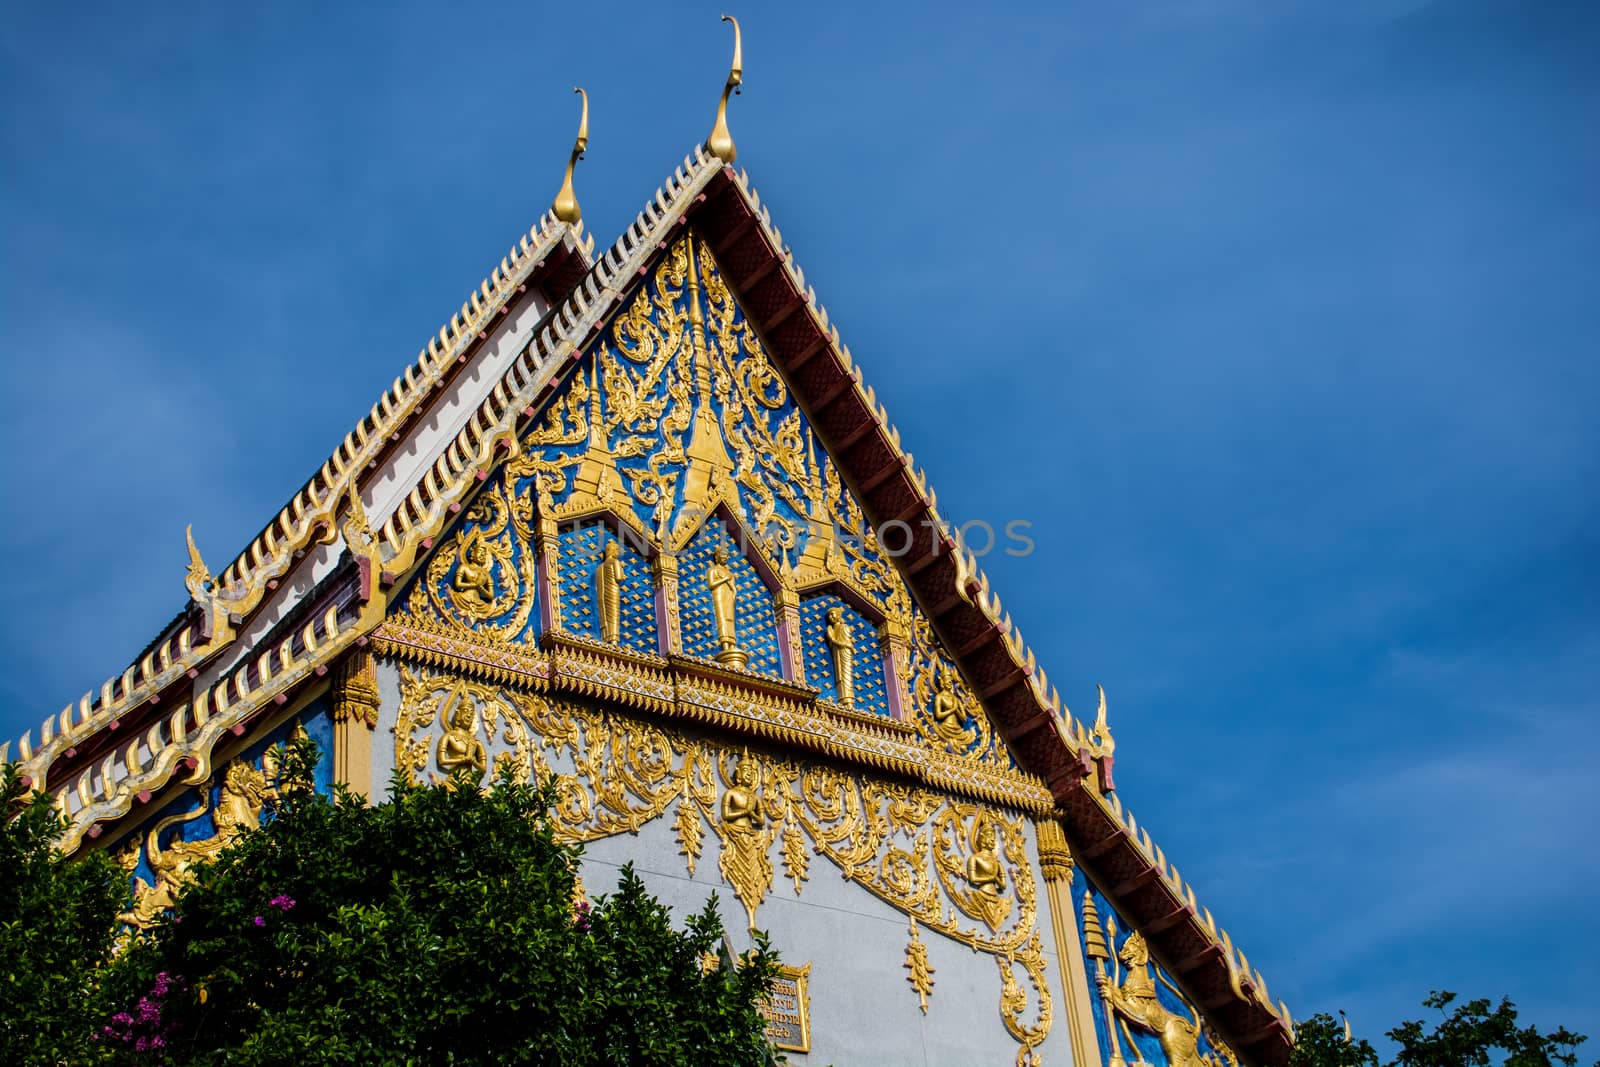 The big thai church under blue sky by golengstock